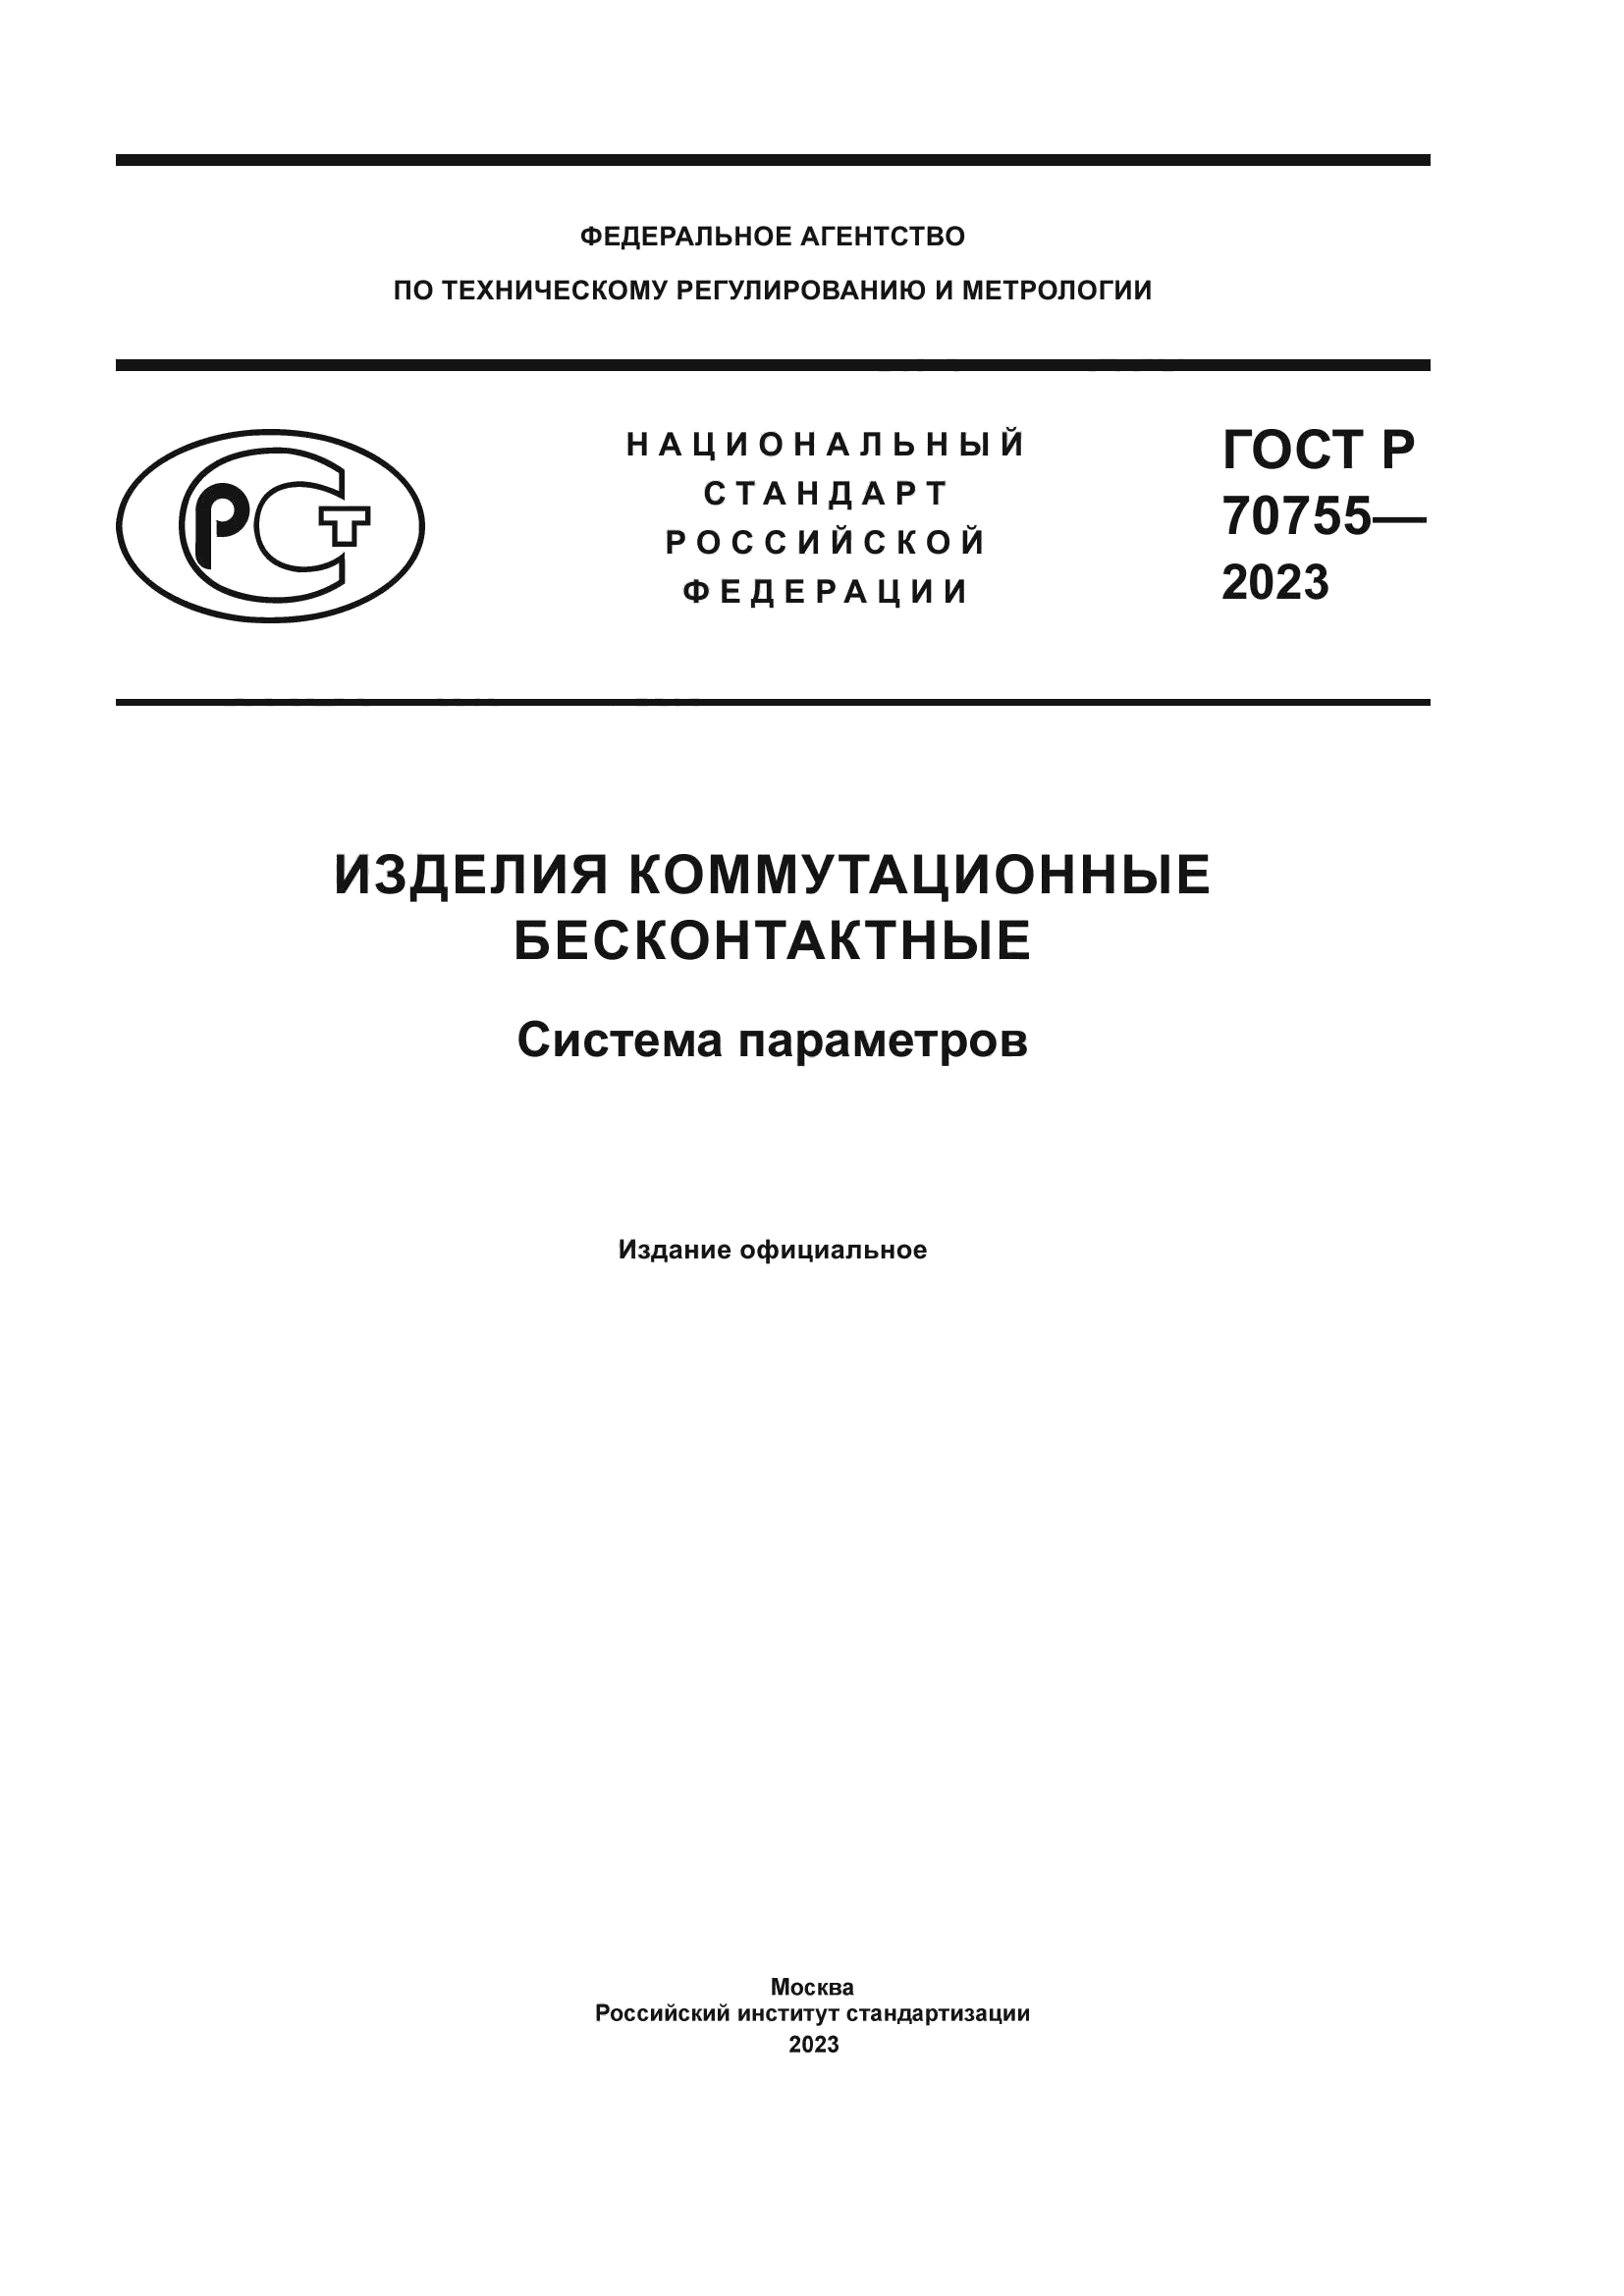 ГОСТ Р 70755-2023